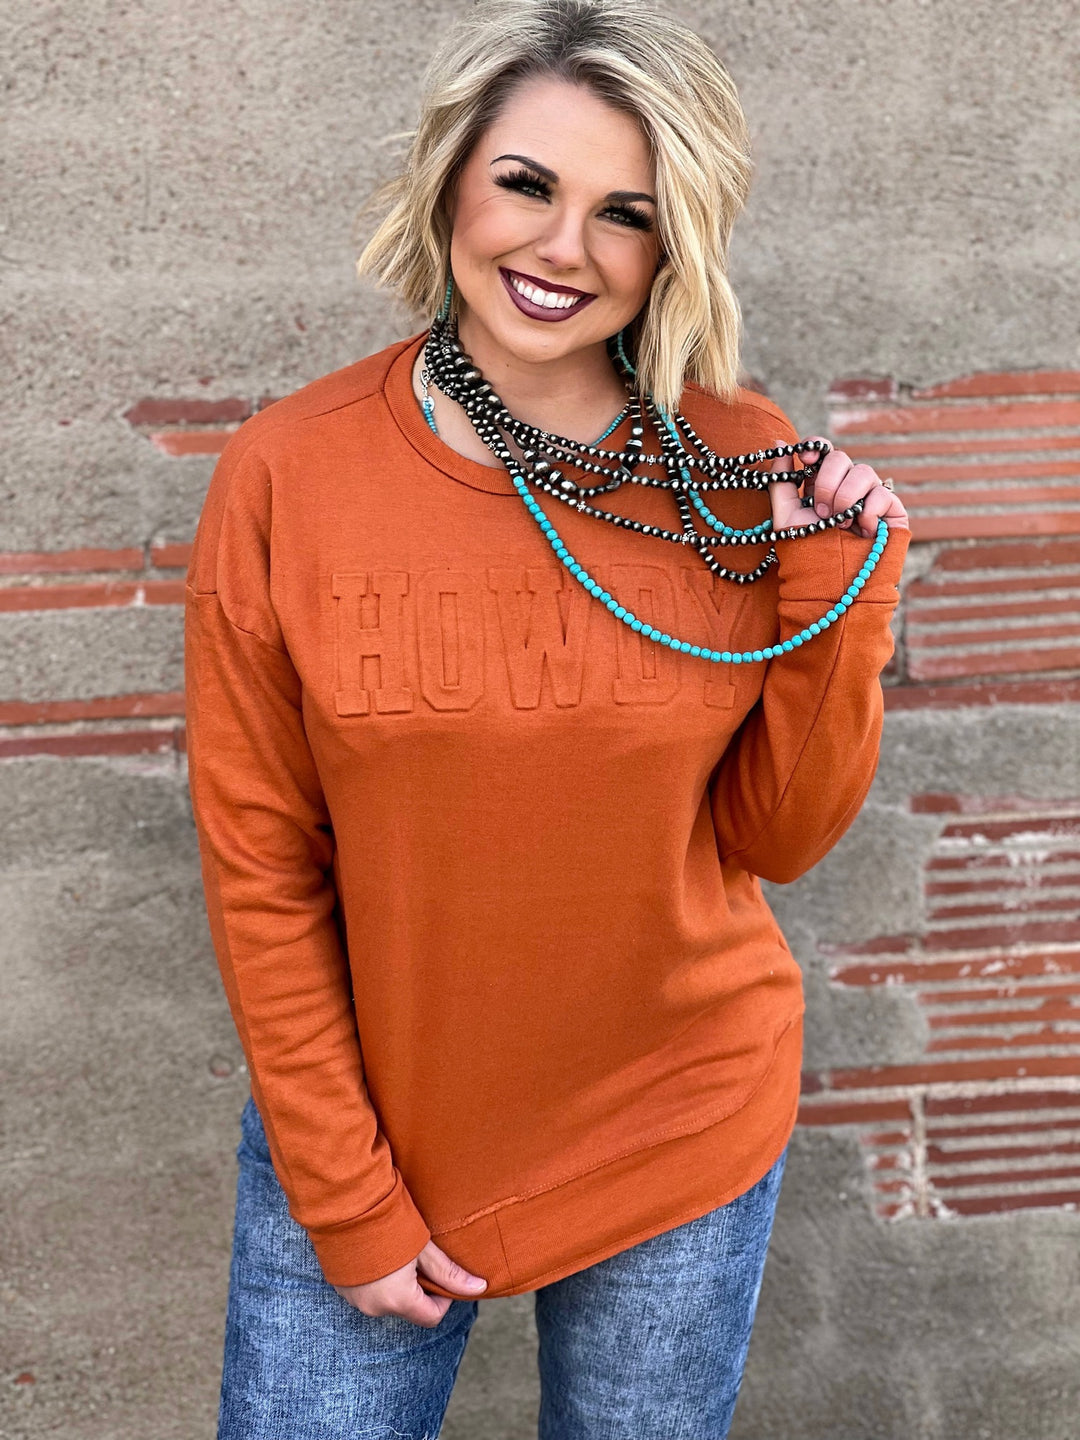 Howdy Rust Sweatshirt by Texas True Threads